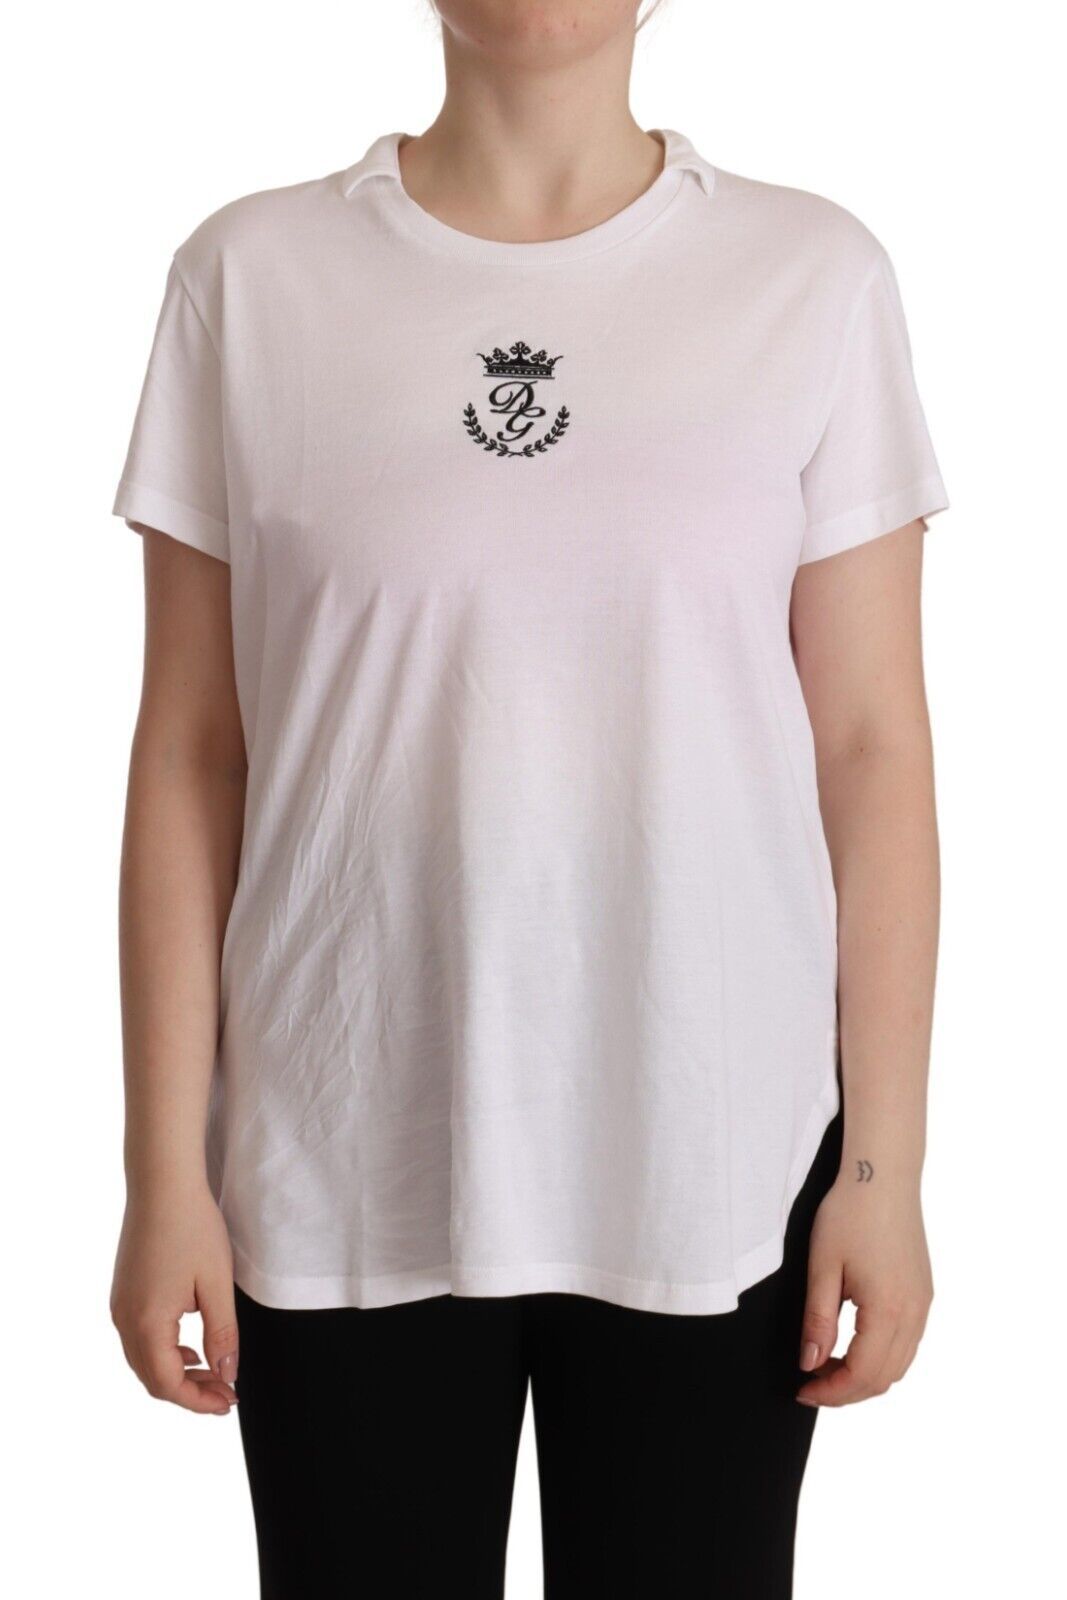 White DG Crown Print Cotton Collared Neck T-shirt